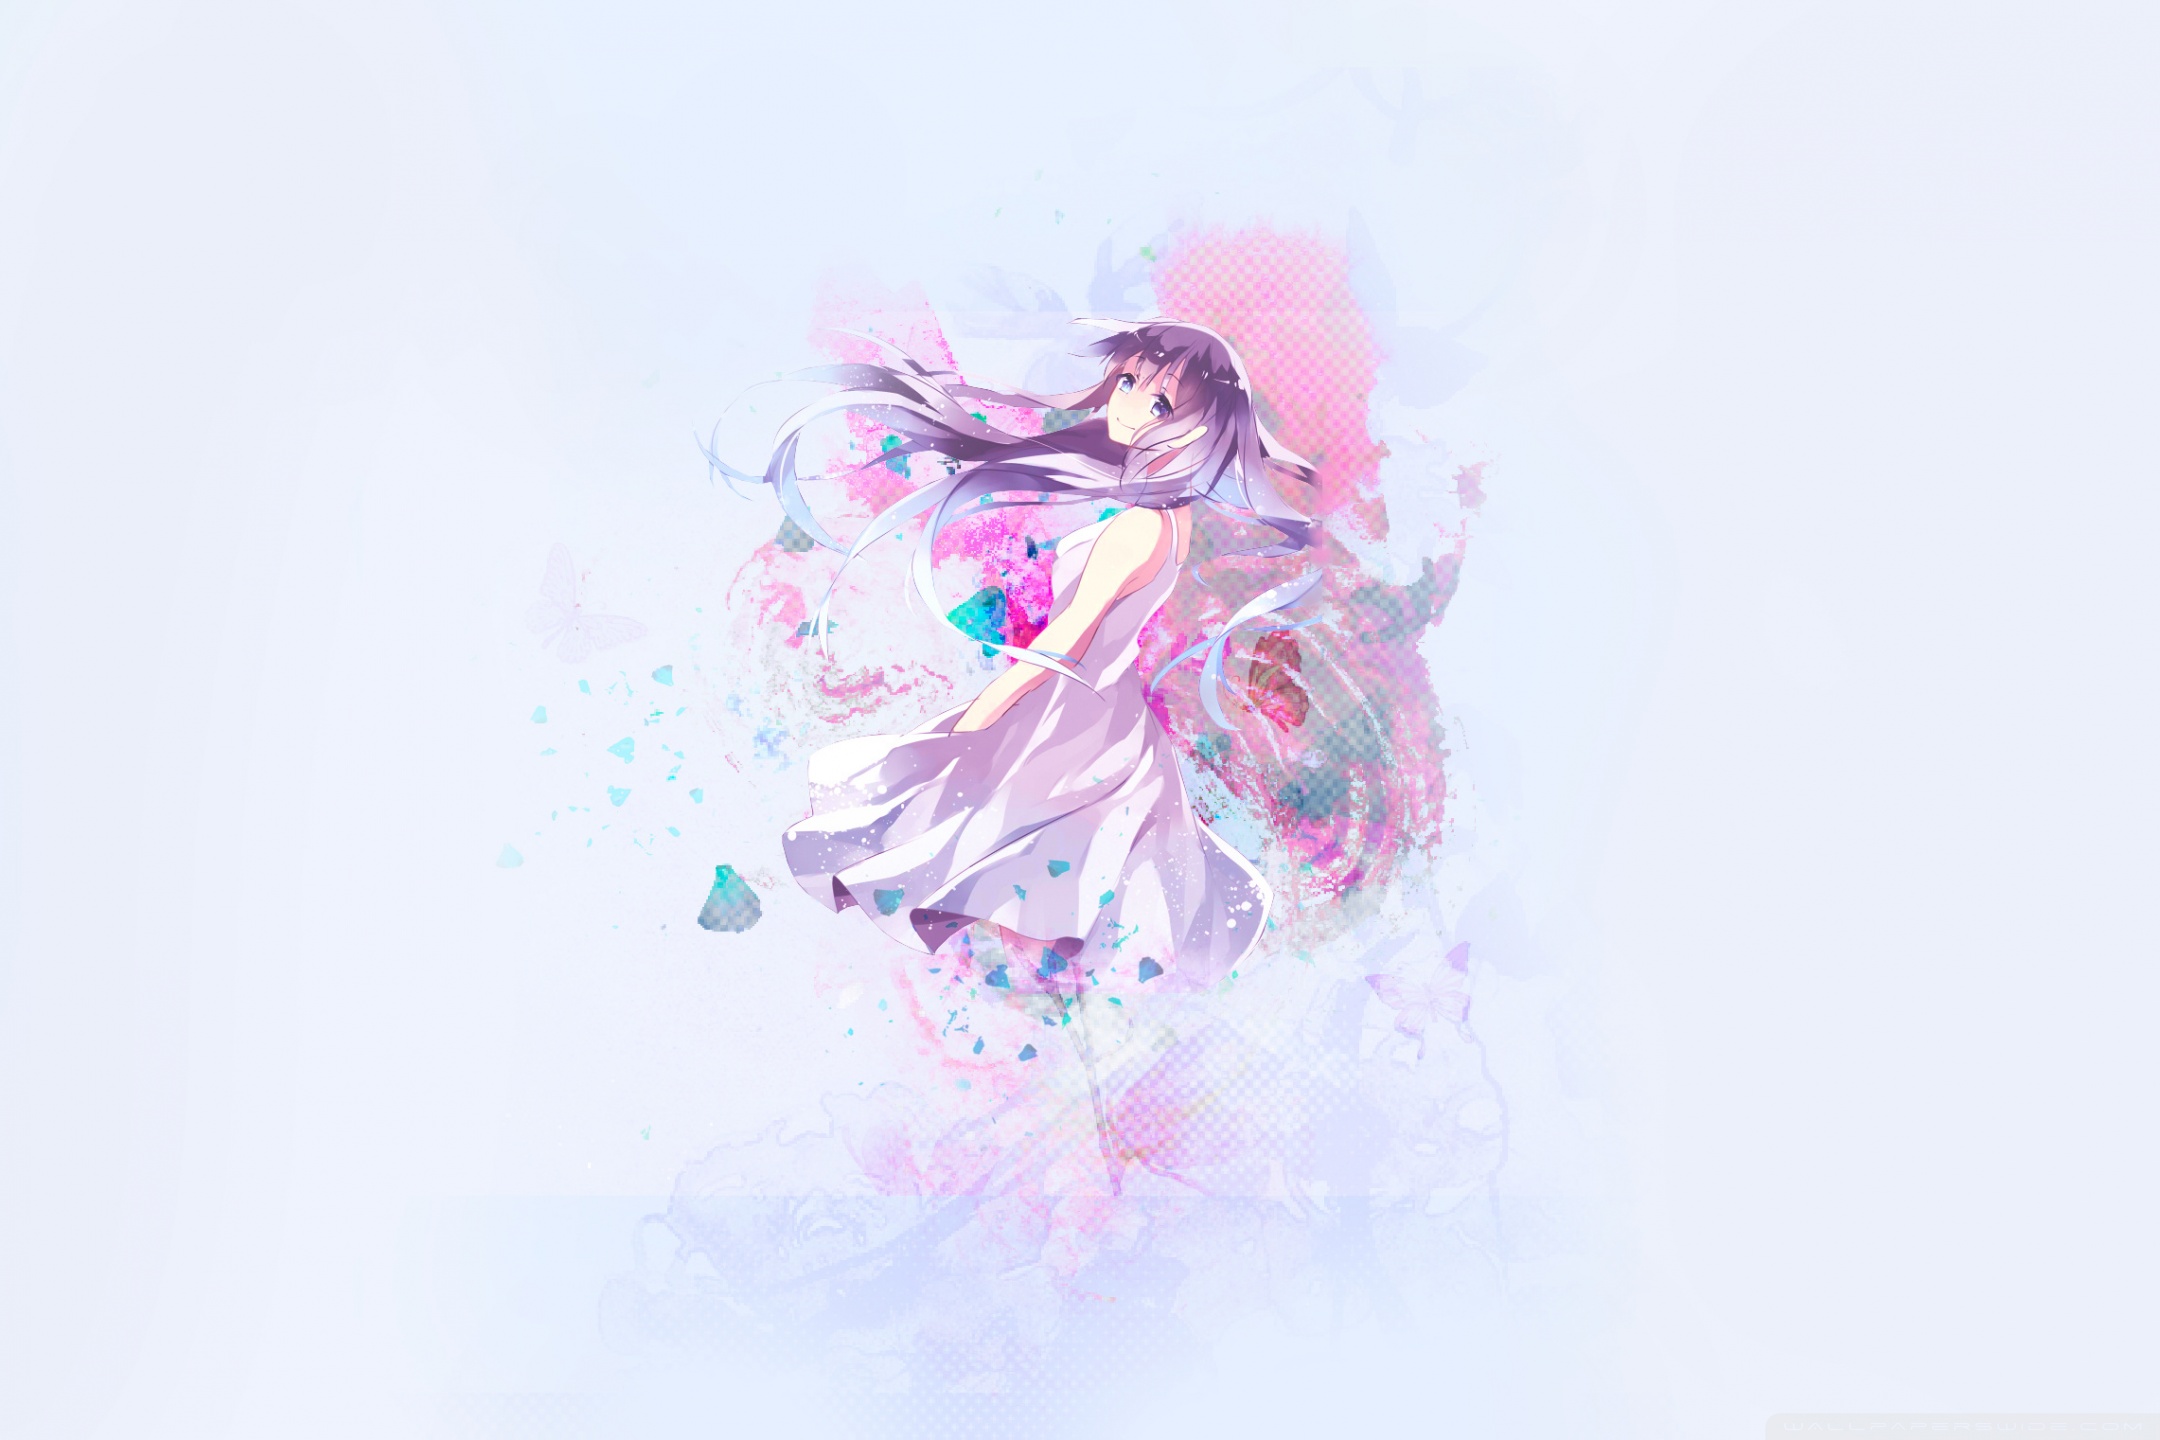 Pastel Anime Ultra Hd Desktop Background Wallpaper For 4k Uhd Tv